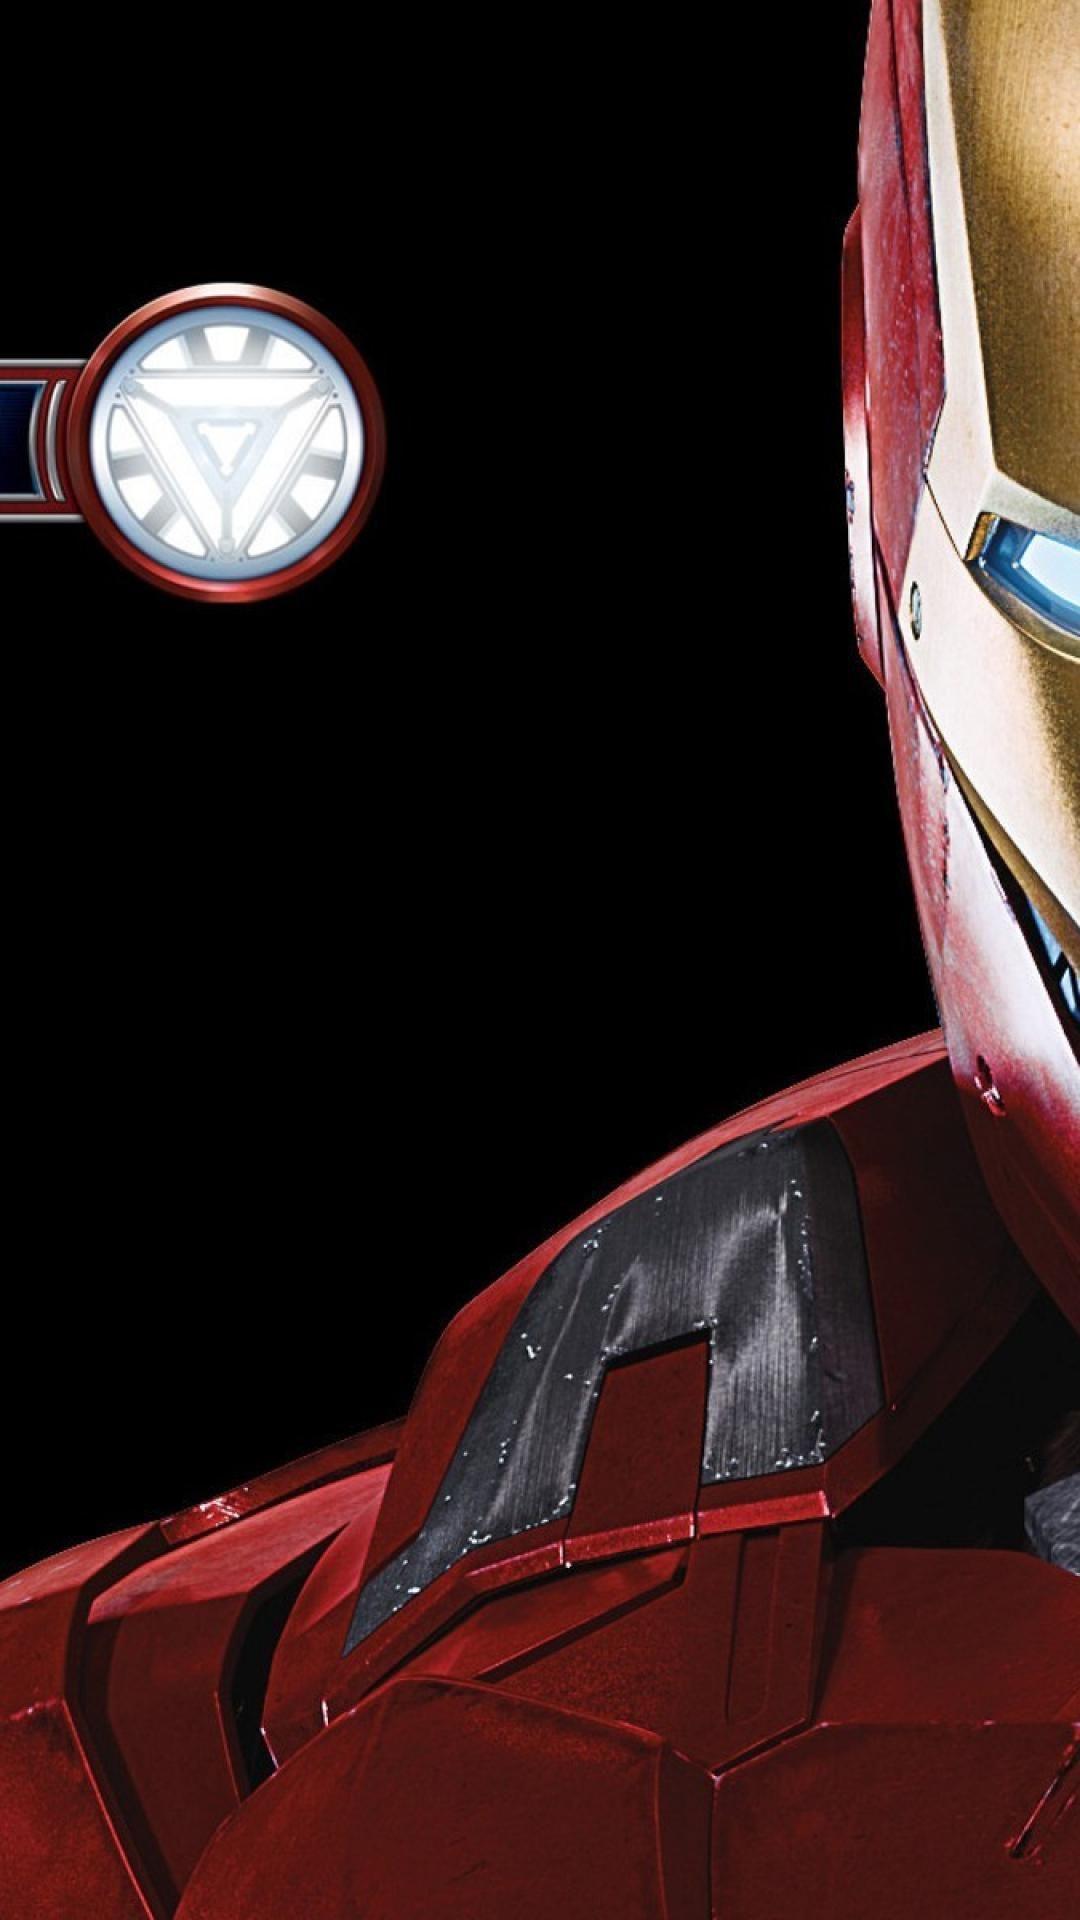 Iron man the avengers (movie) wallpaper